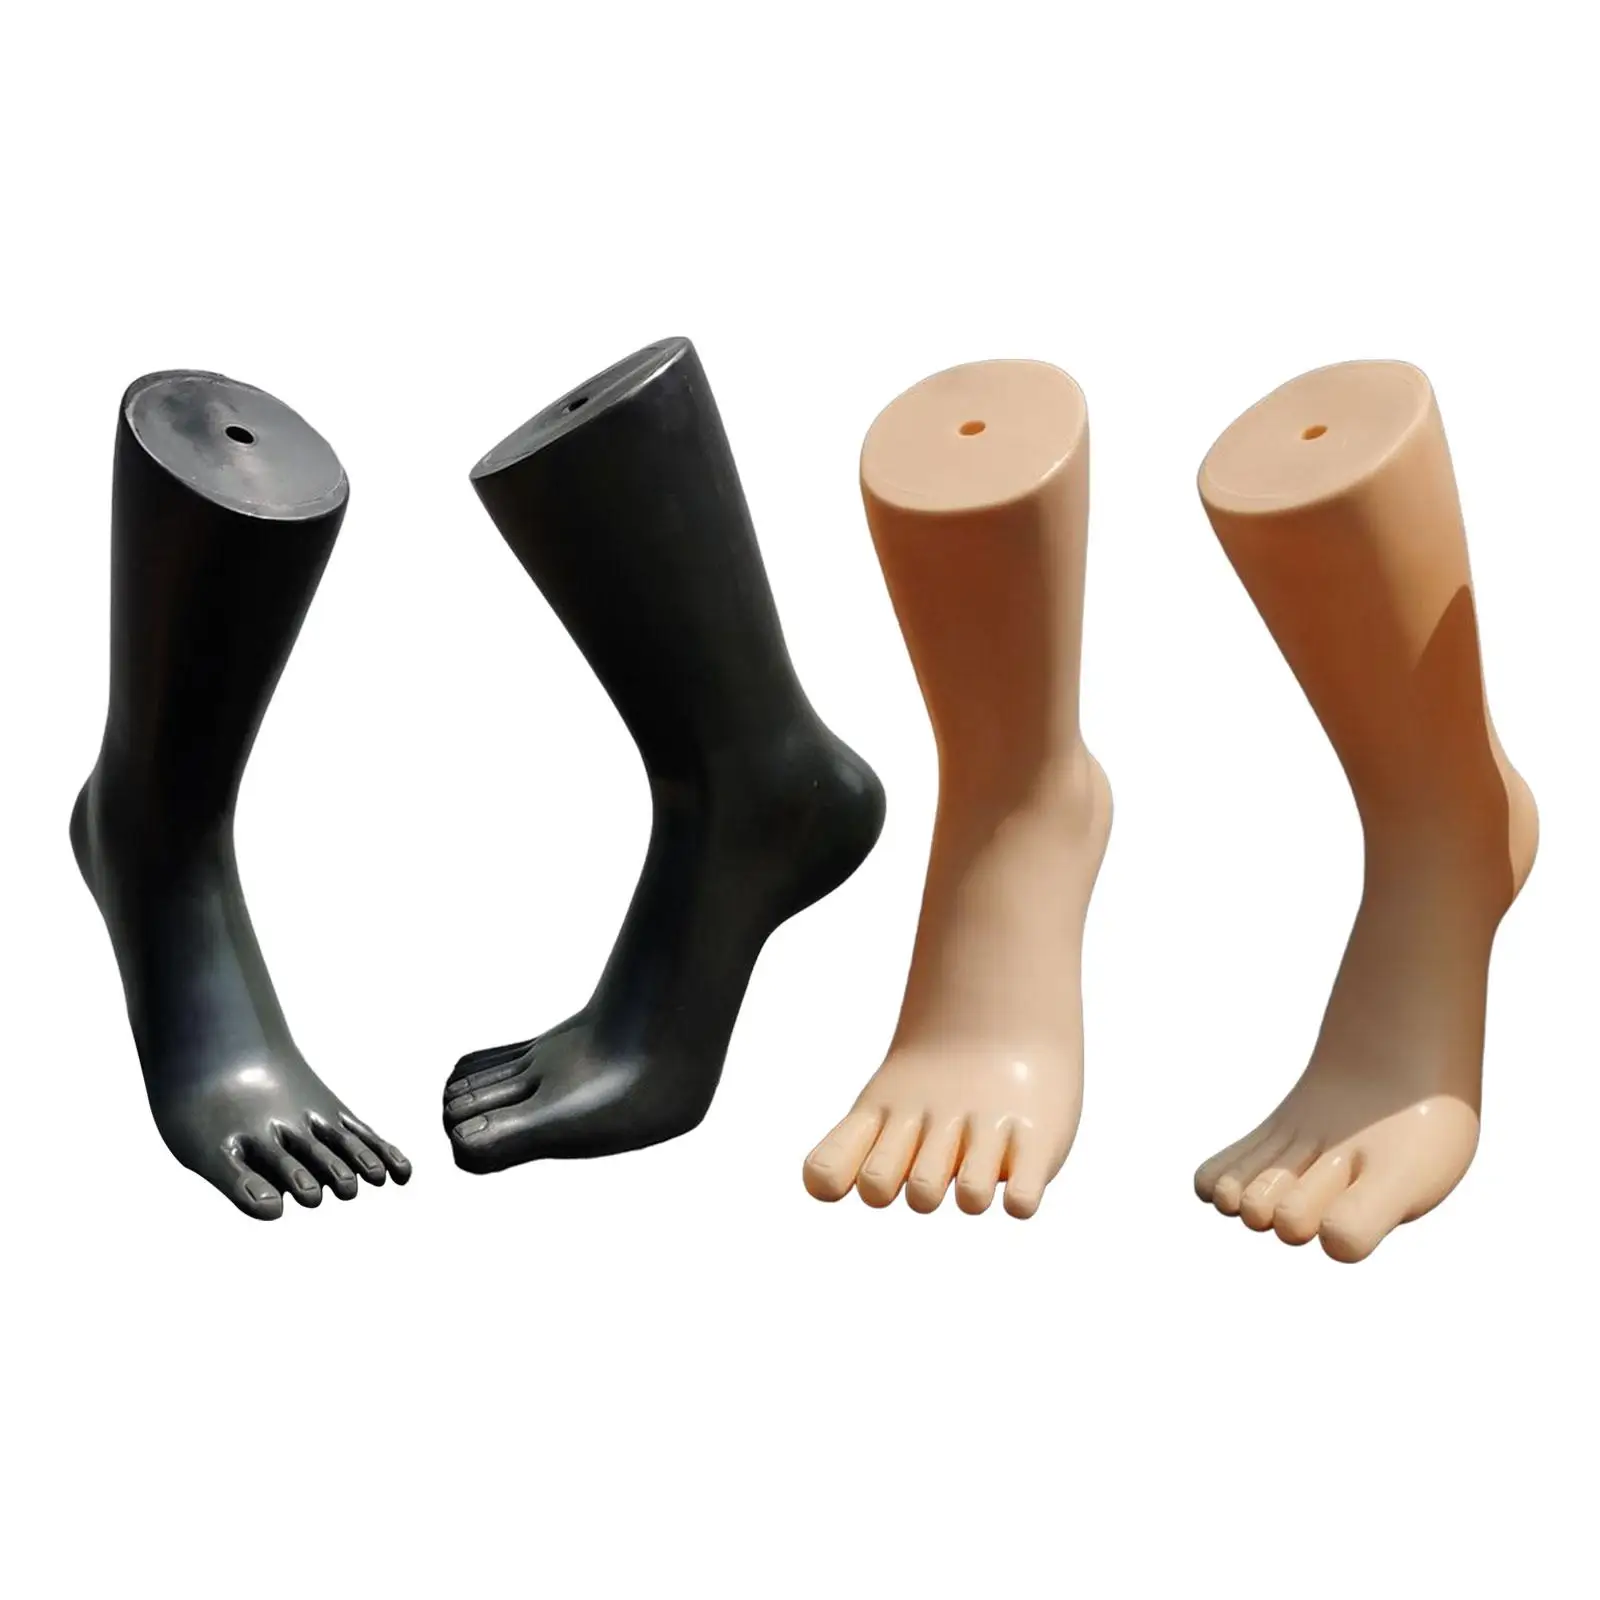 Mannequin Feet Model Simulation Foot Model Shoes Displays Model Toe Separate Foot Model Display for Shop Retail Medium Stocking